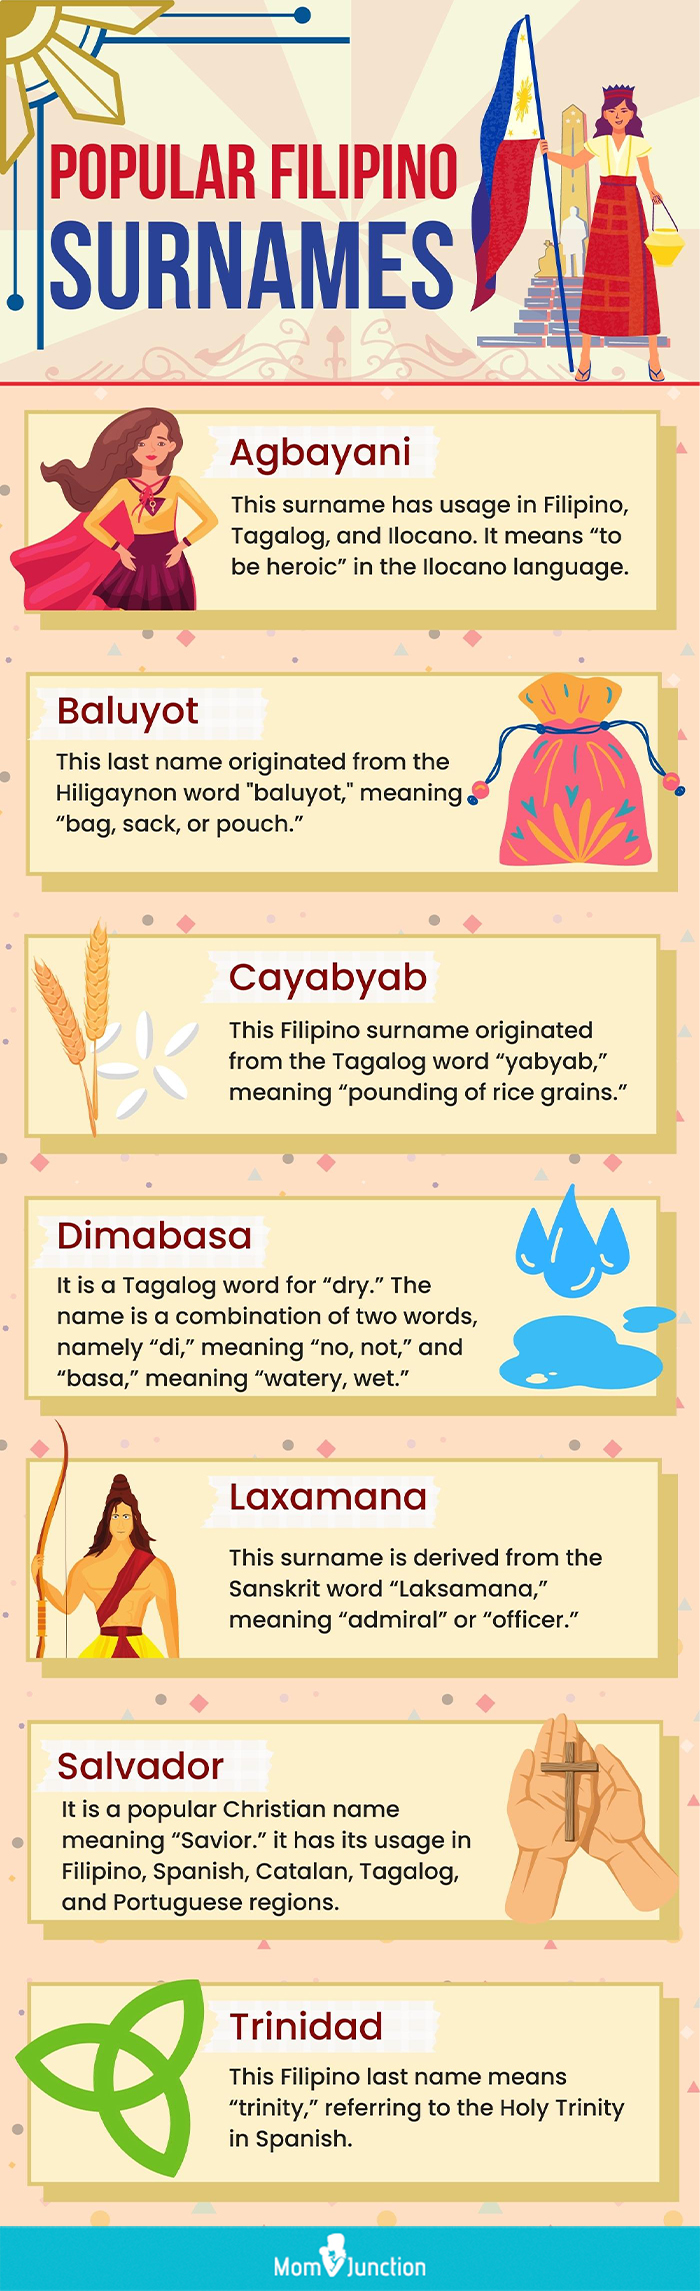 popular filipino surnames (infographic)